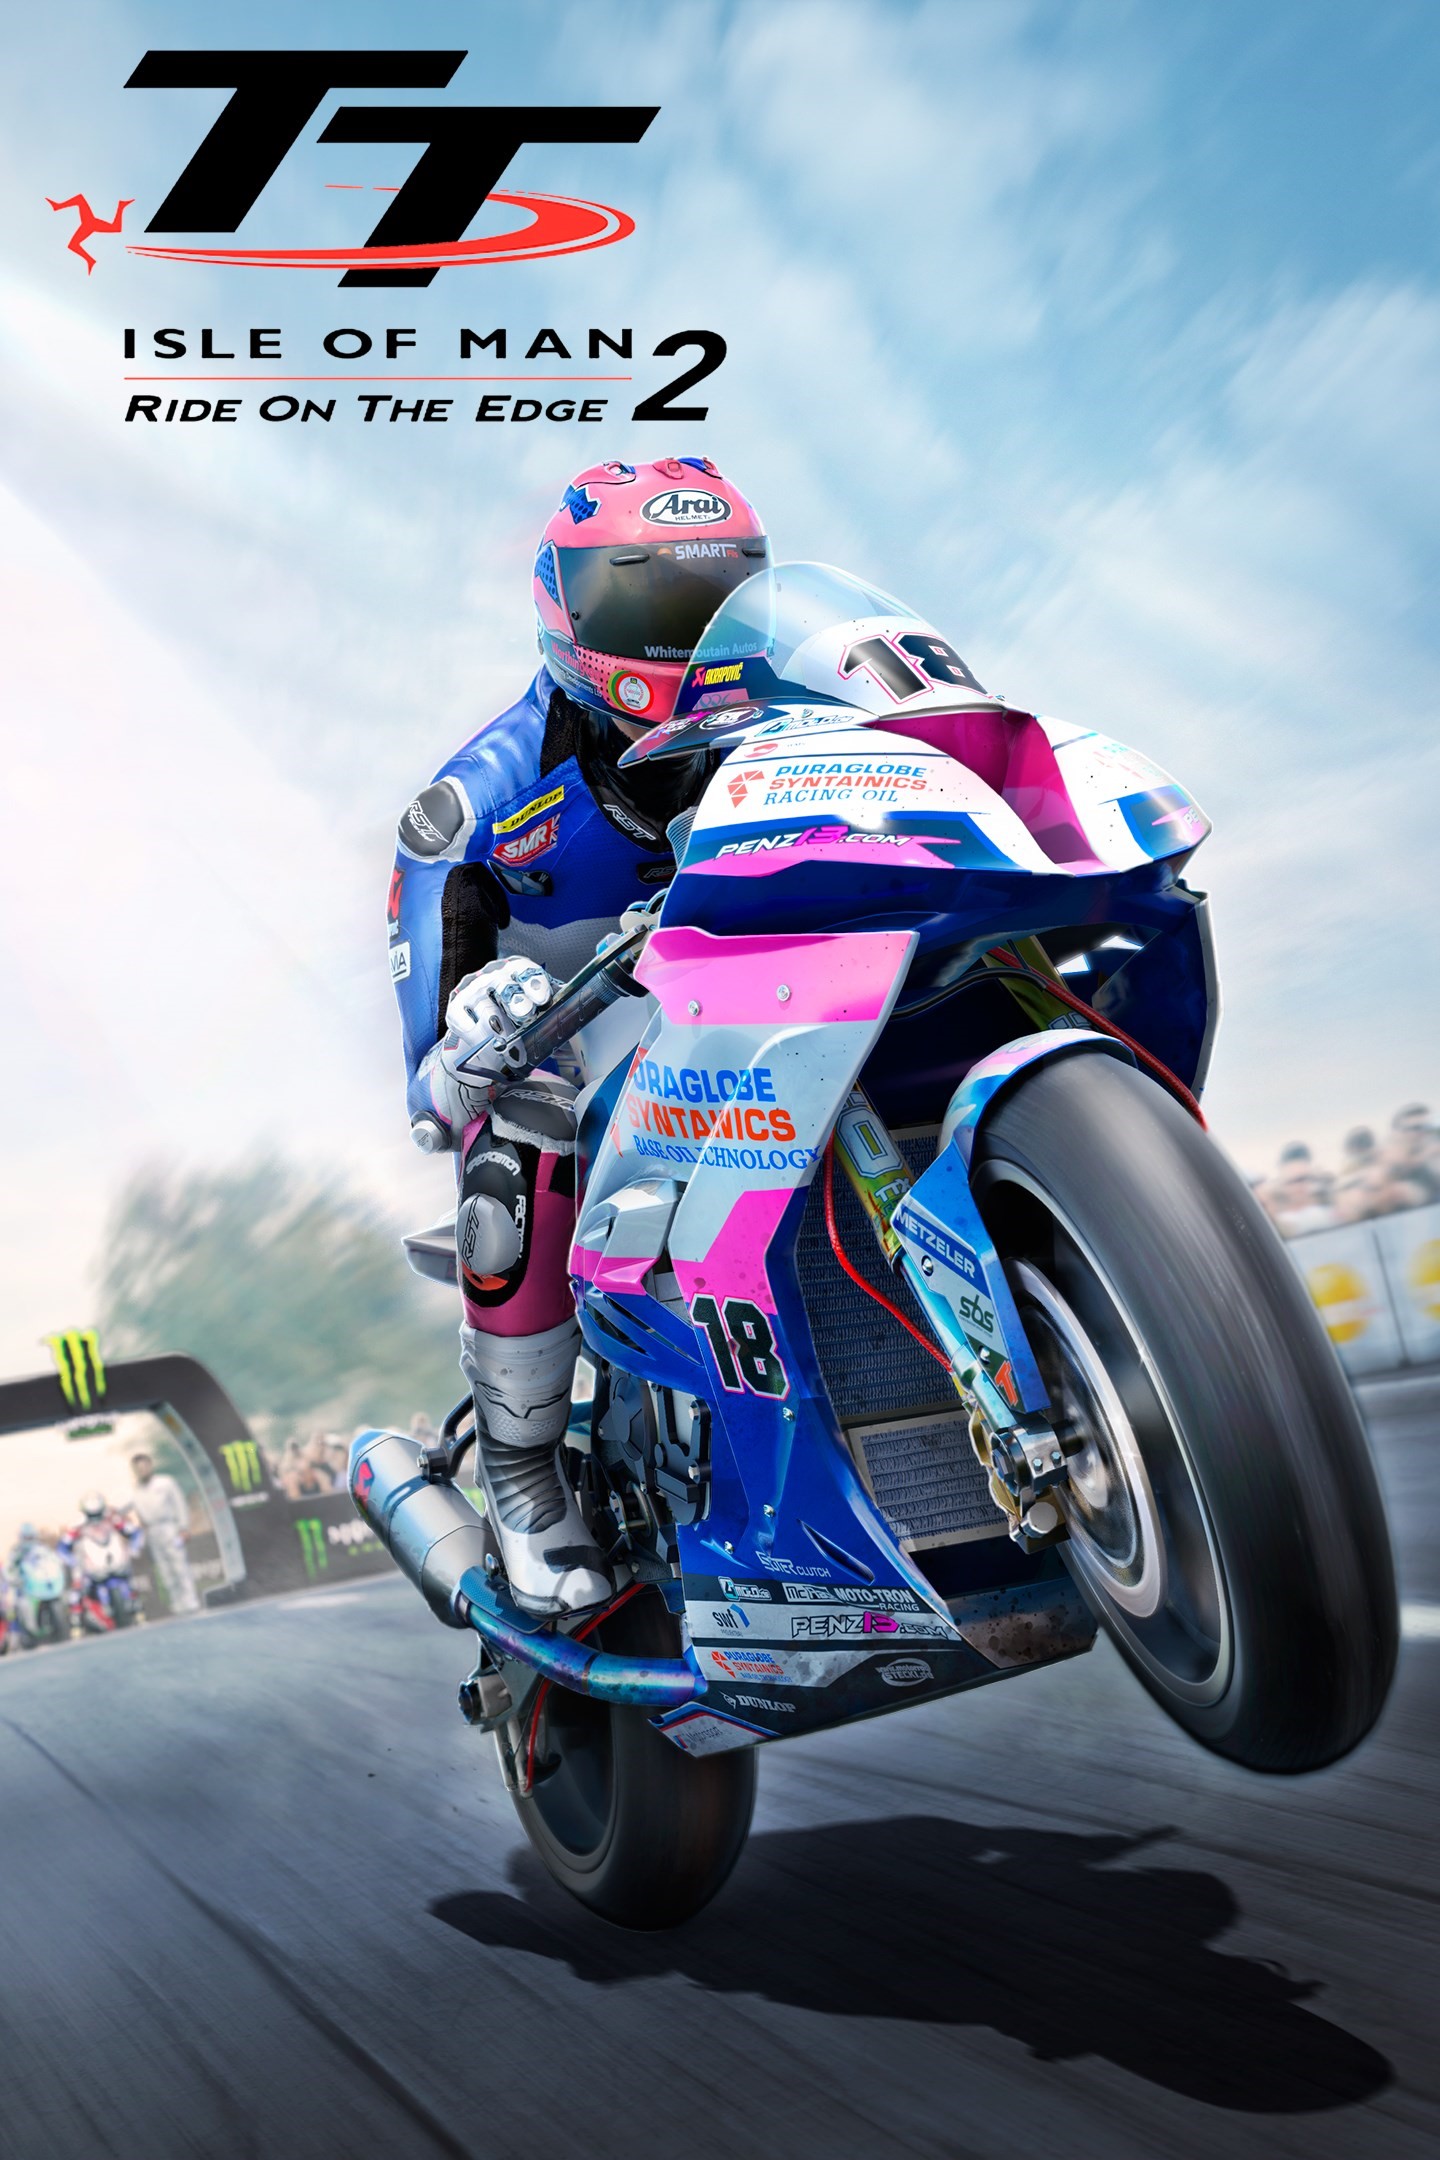 TT Isle of Man Ride on the Edge 2/Xbox